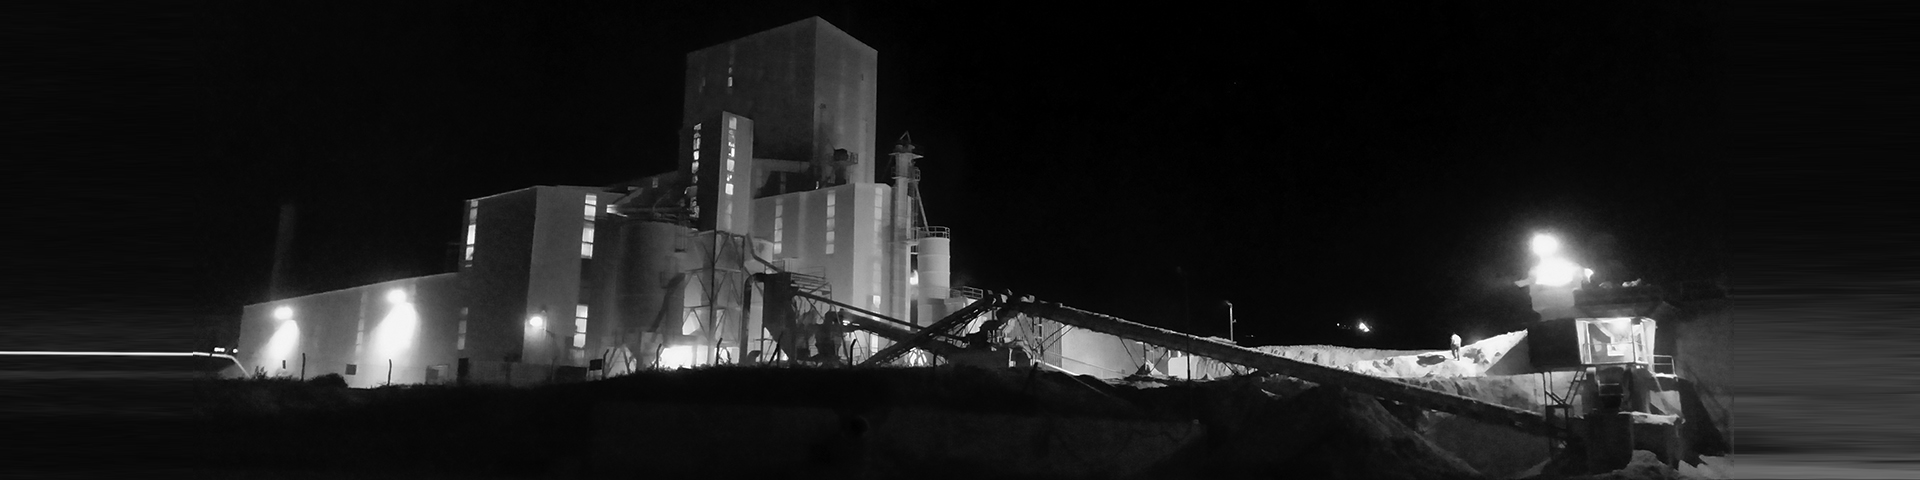 Gypsum factory